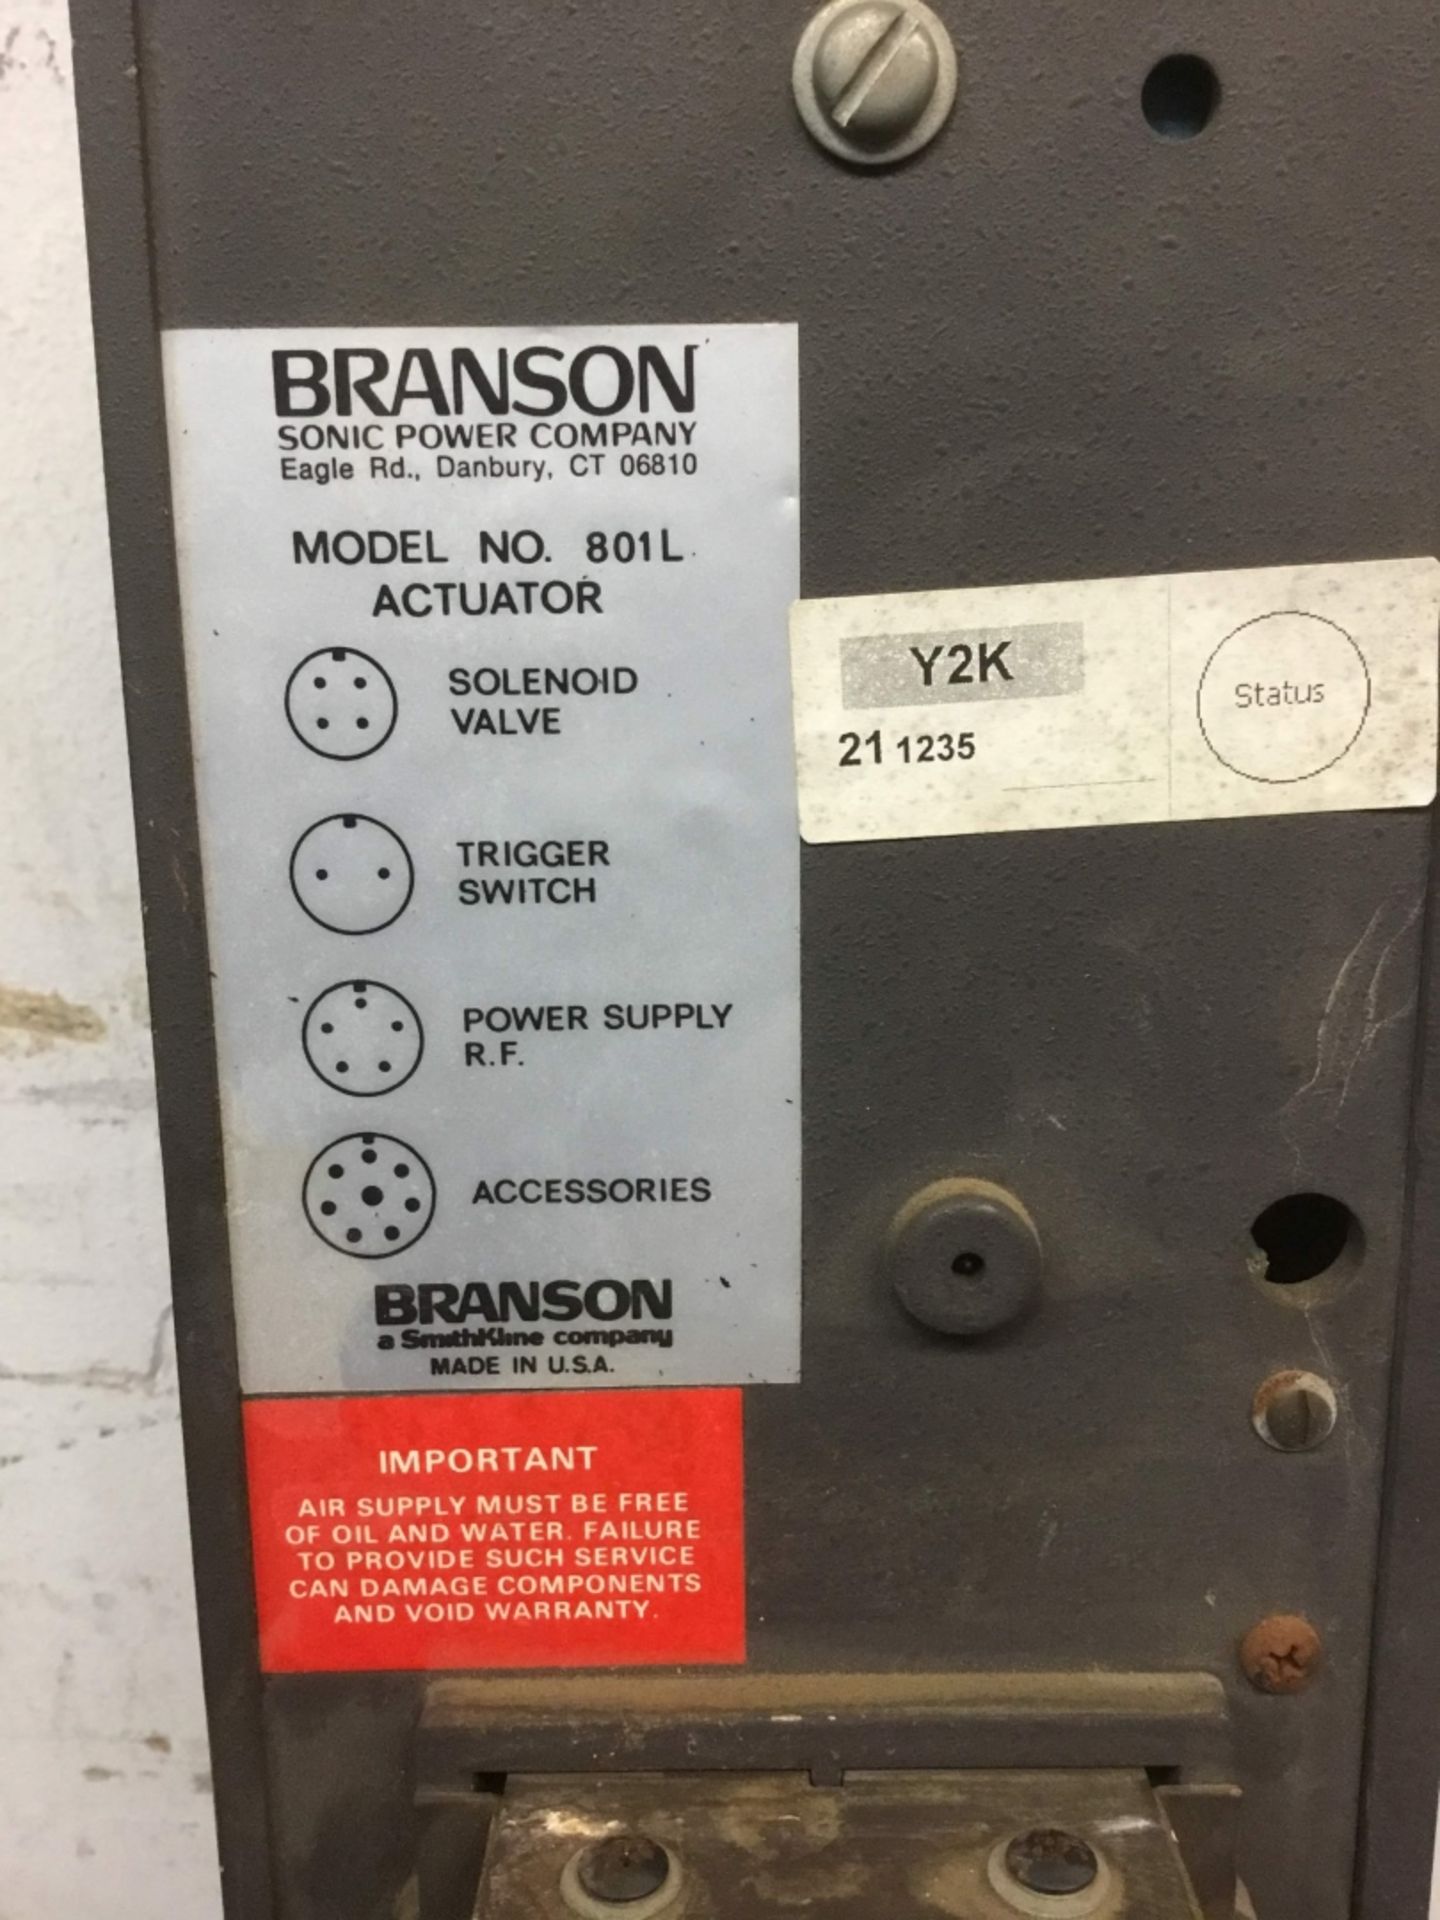 Branson Sonic Power Company Actuator 801L - Image 7 of 17